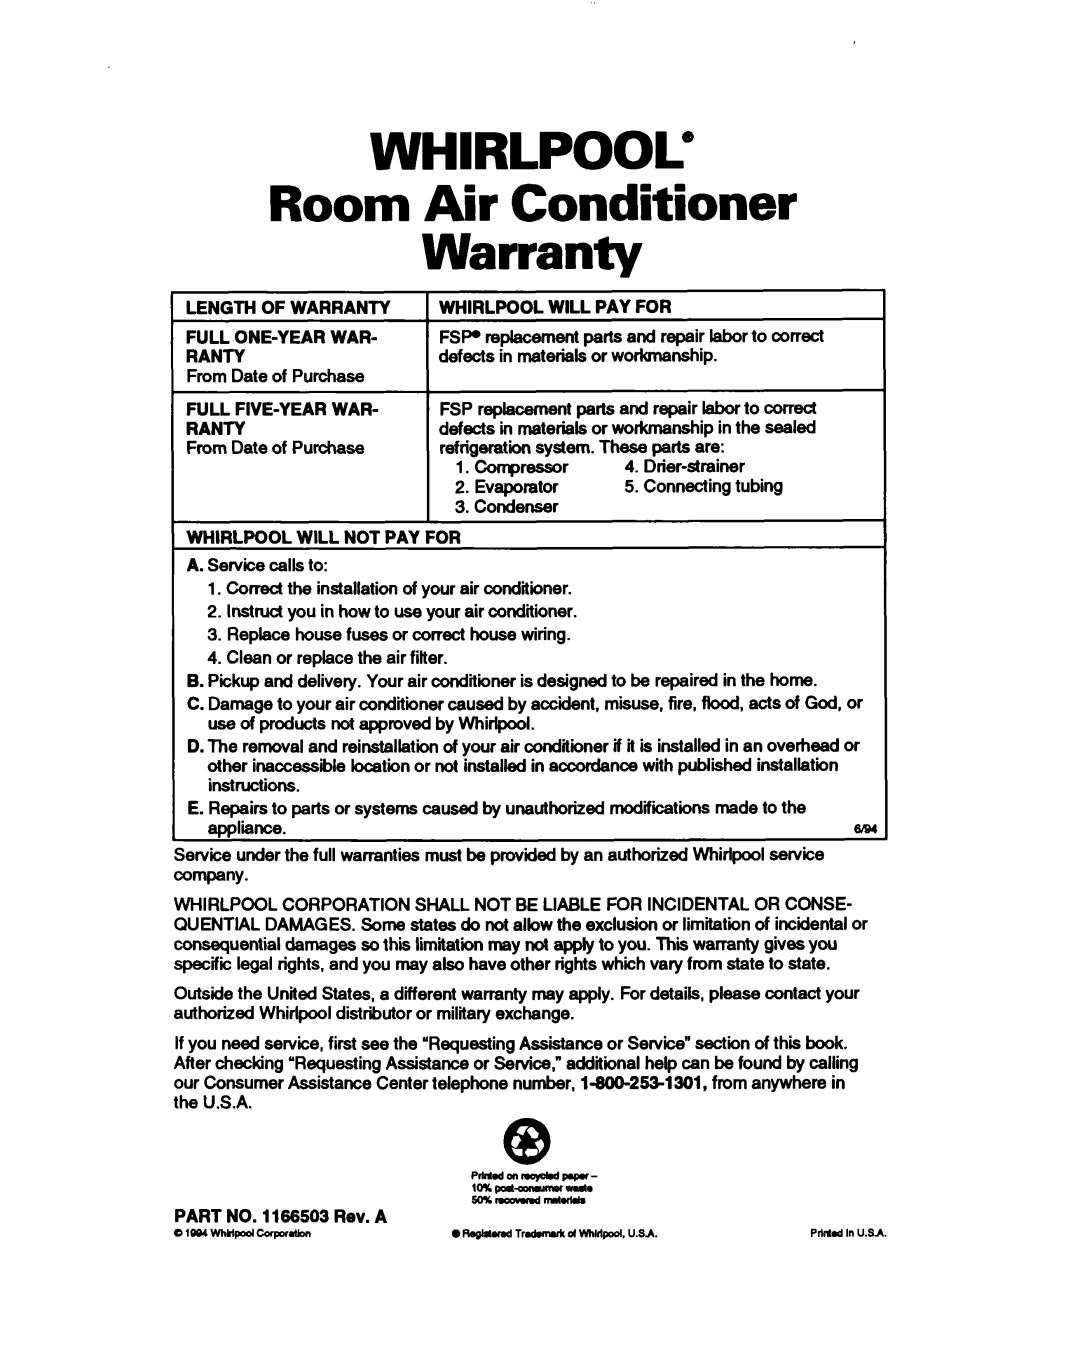 Whirlpool ACU124XD0 warranty Whirlpool@, Room Air Conditioner Warranty 